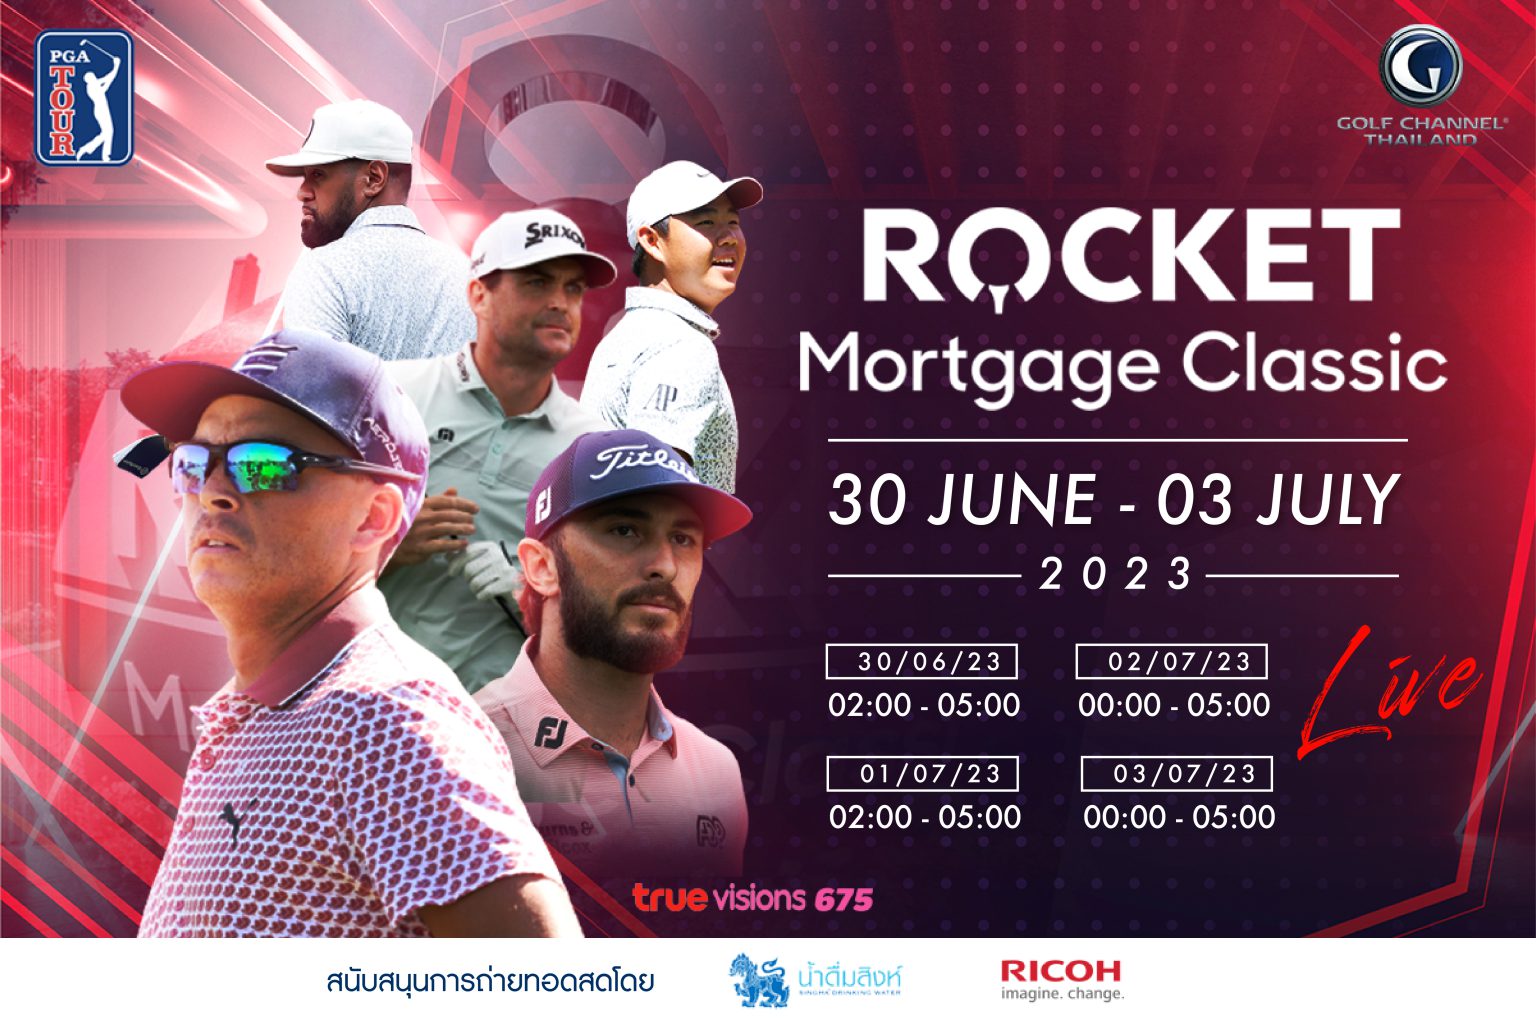 2023 PGA Tour Rocket Mortgage Classic Golf Channel Thailand